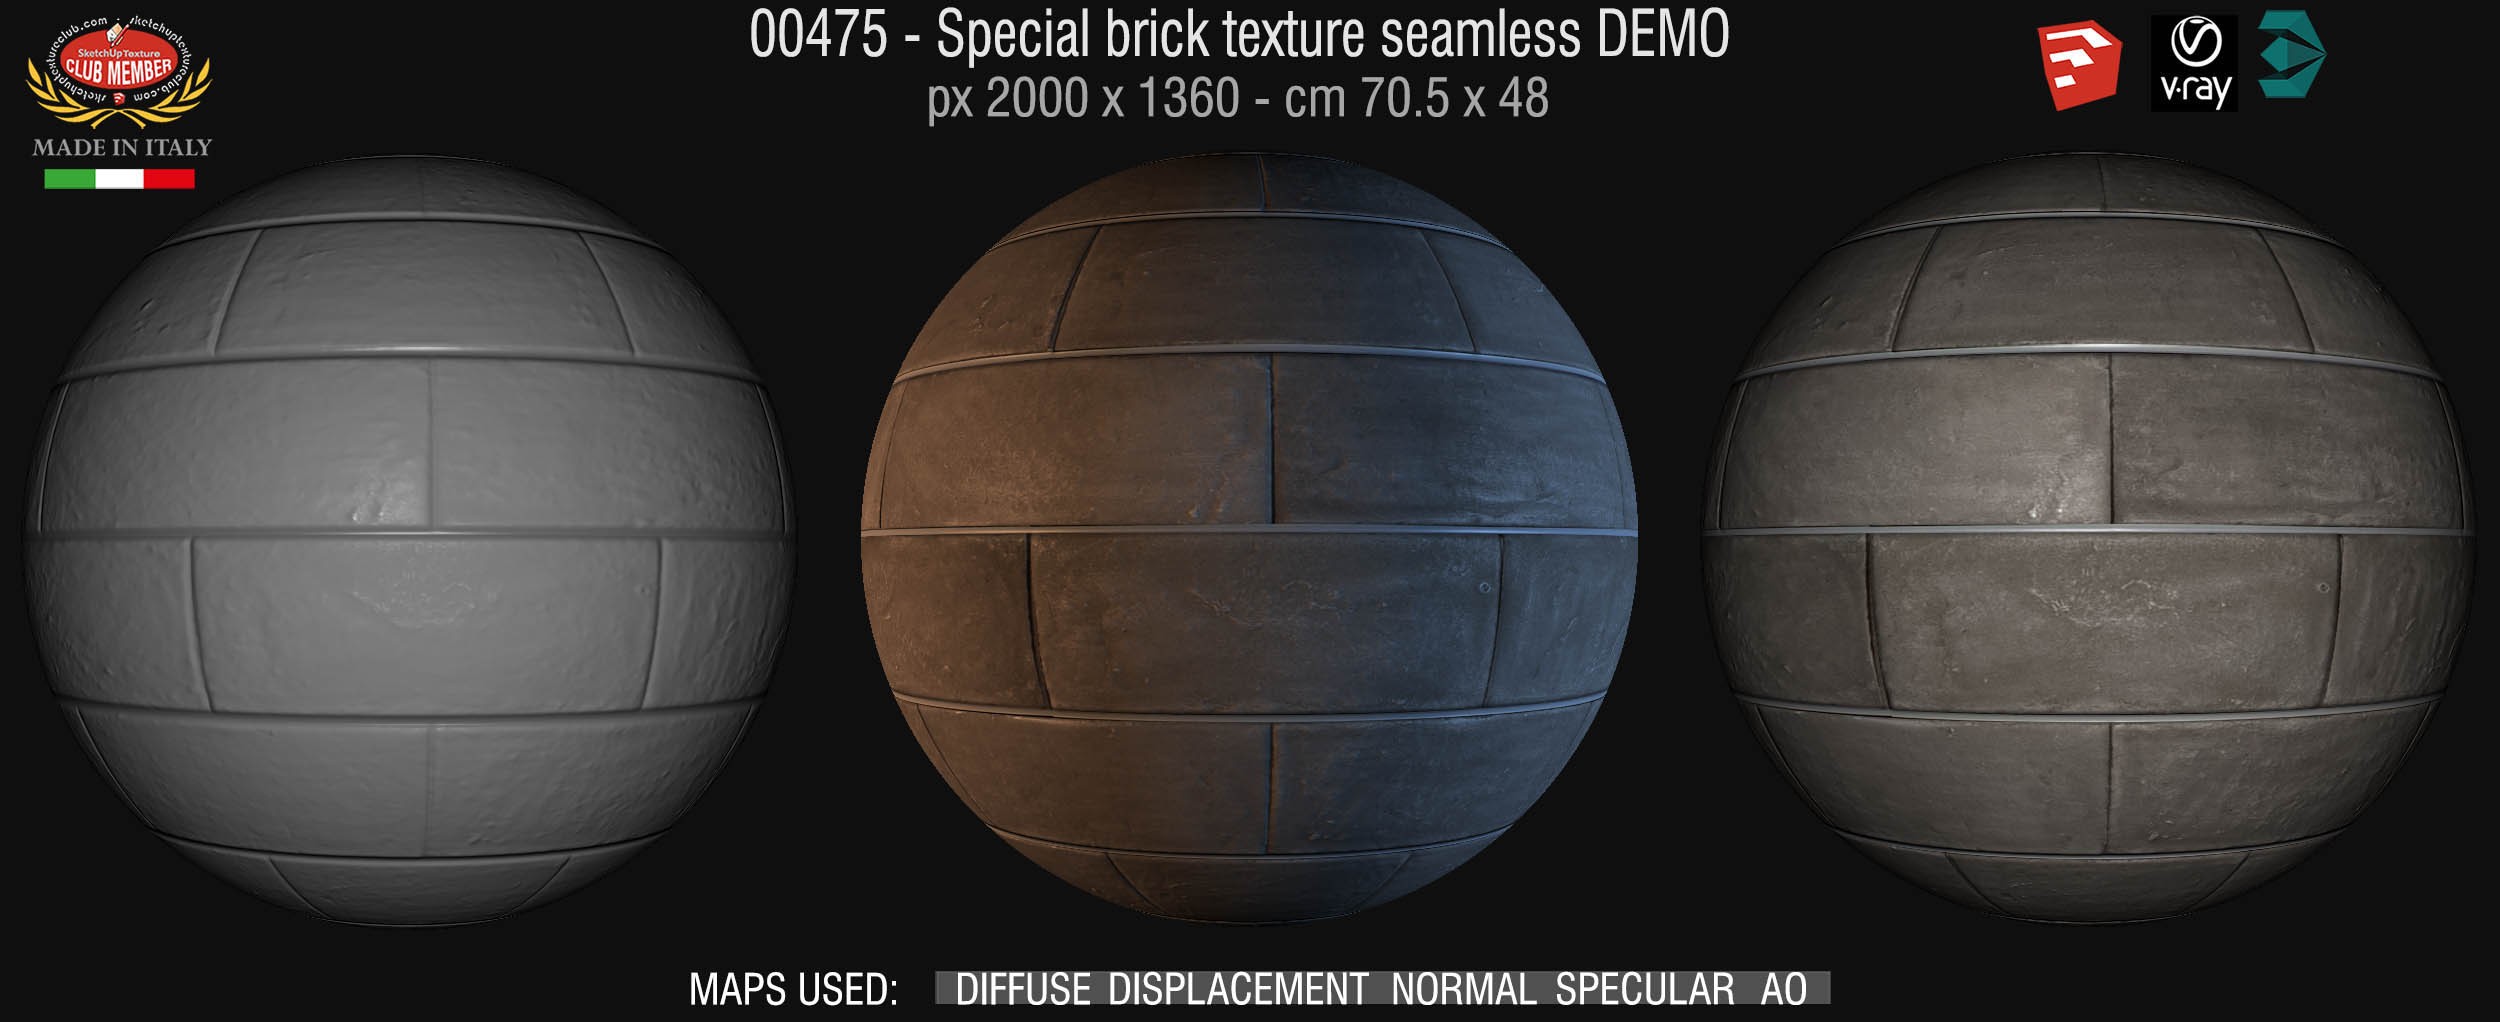 00475 Special brick texture seamless + maps DEMO